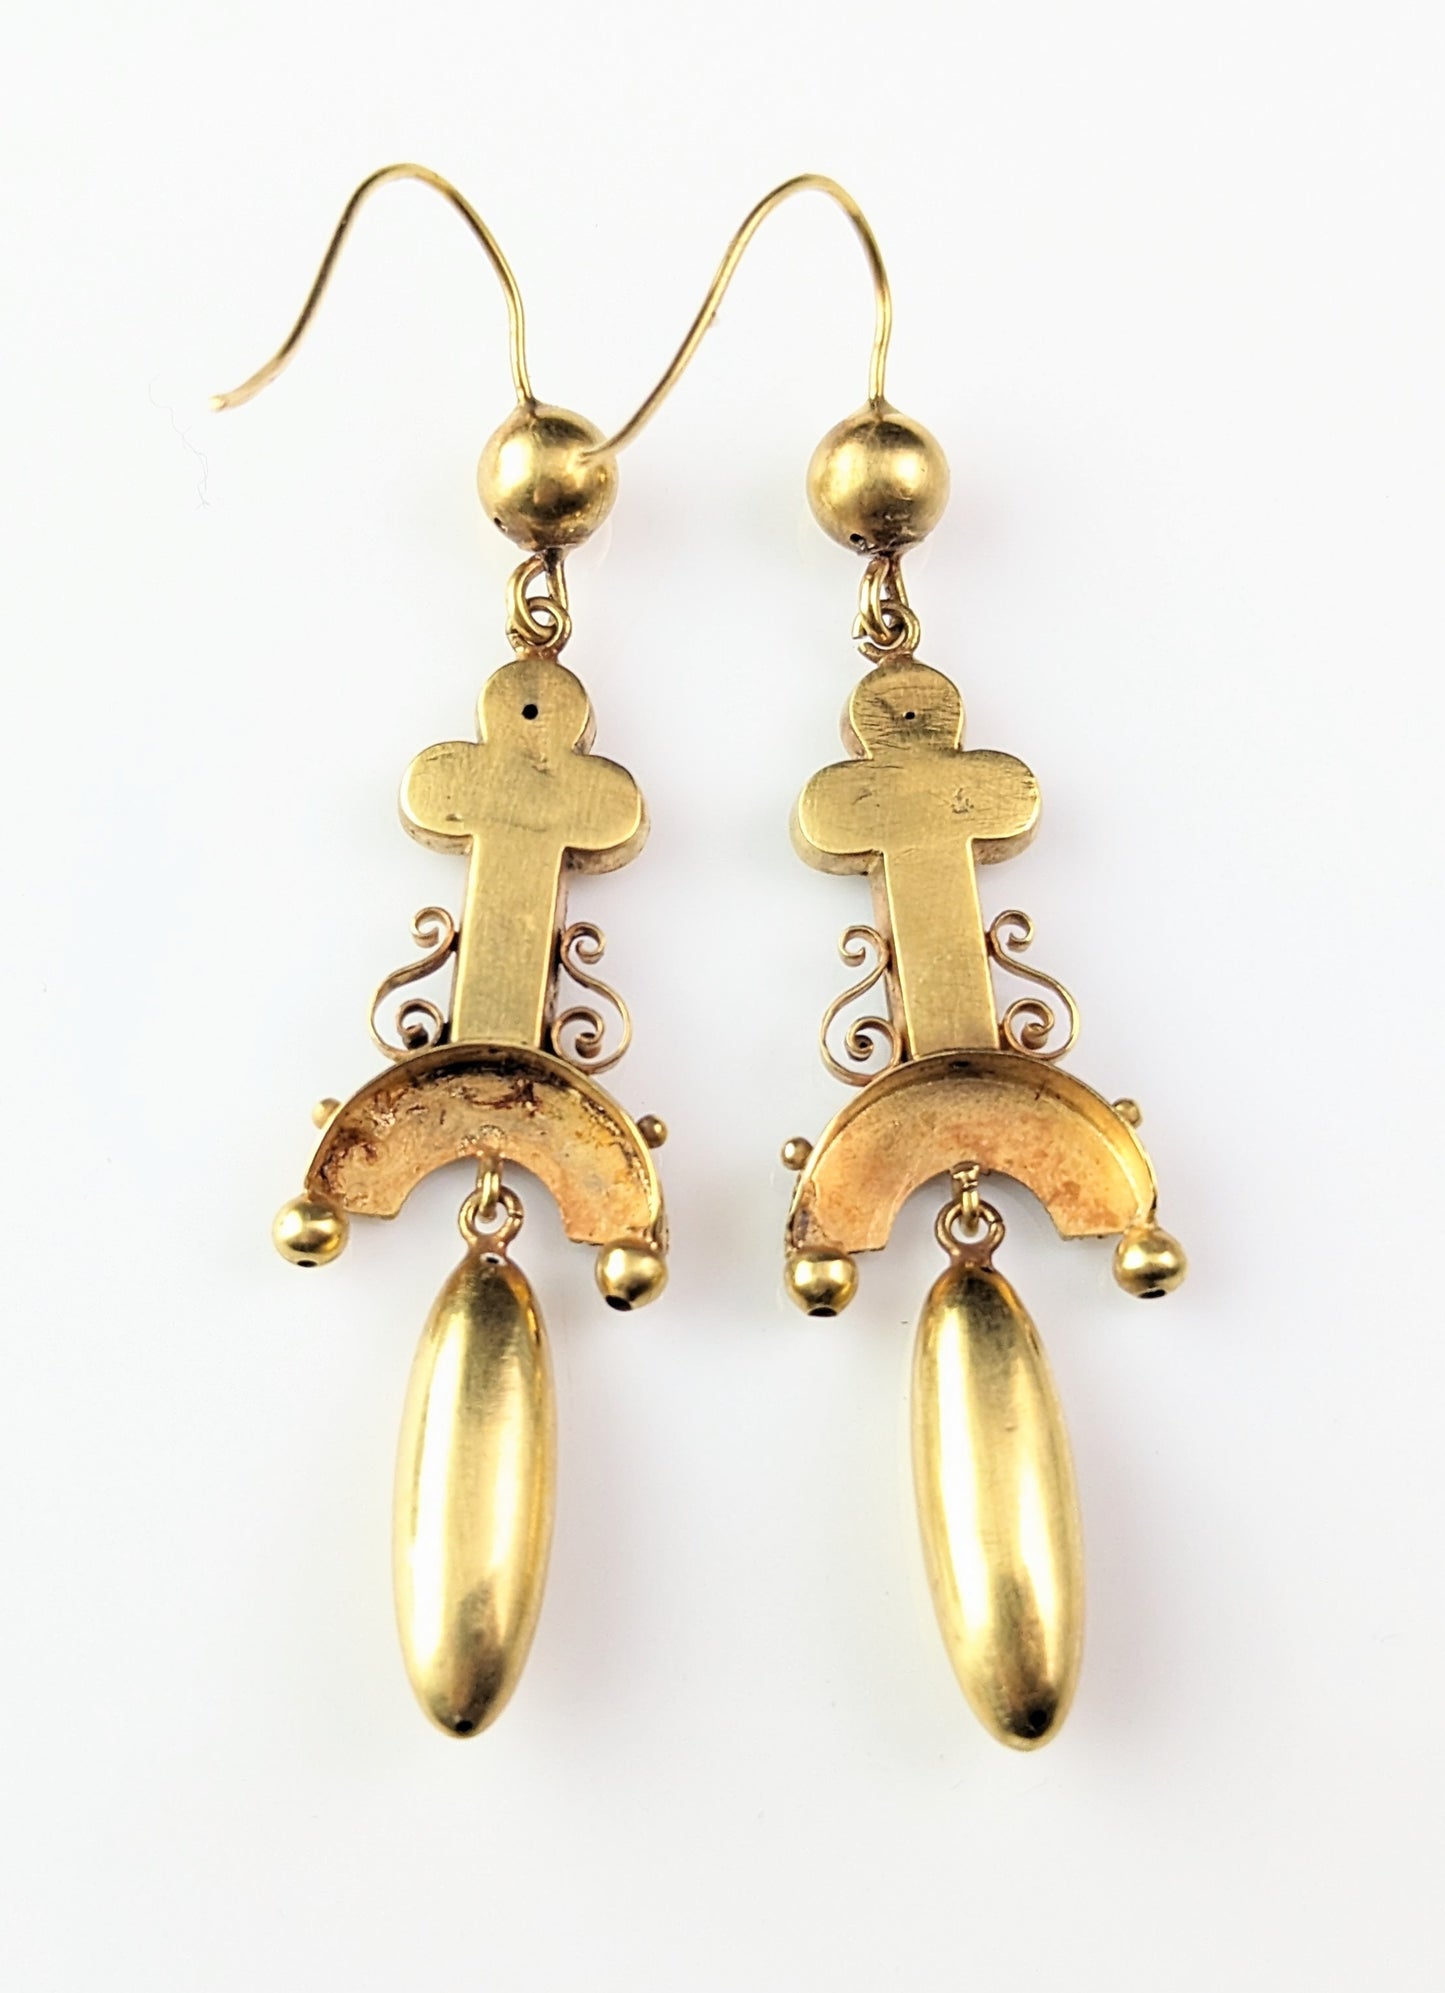 Antique Victorian Etruscan revival dangle earrings, 15ct gold